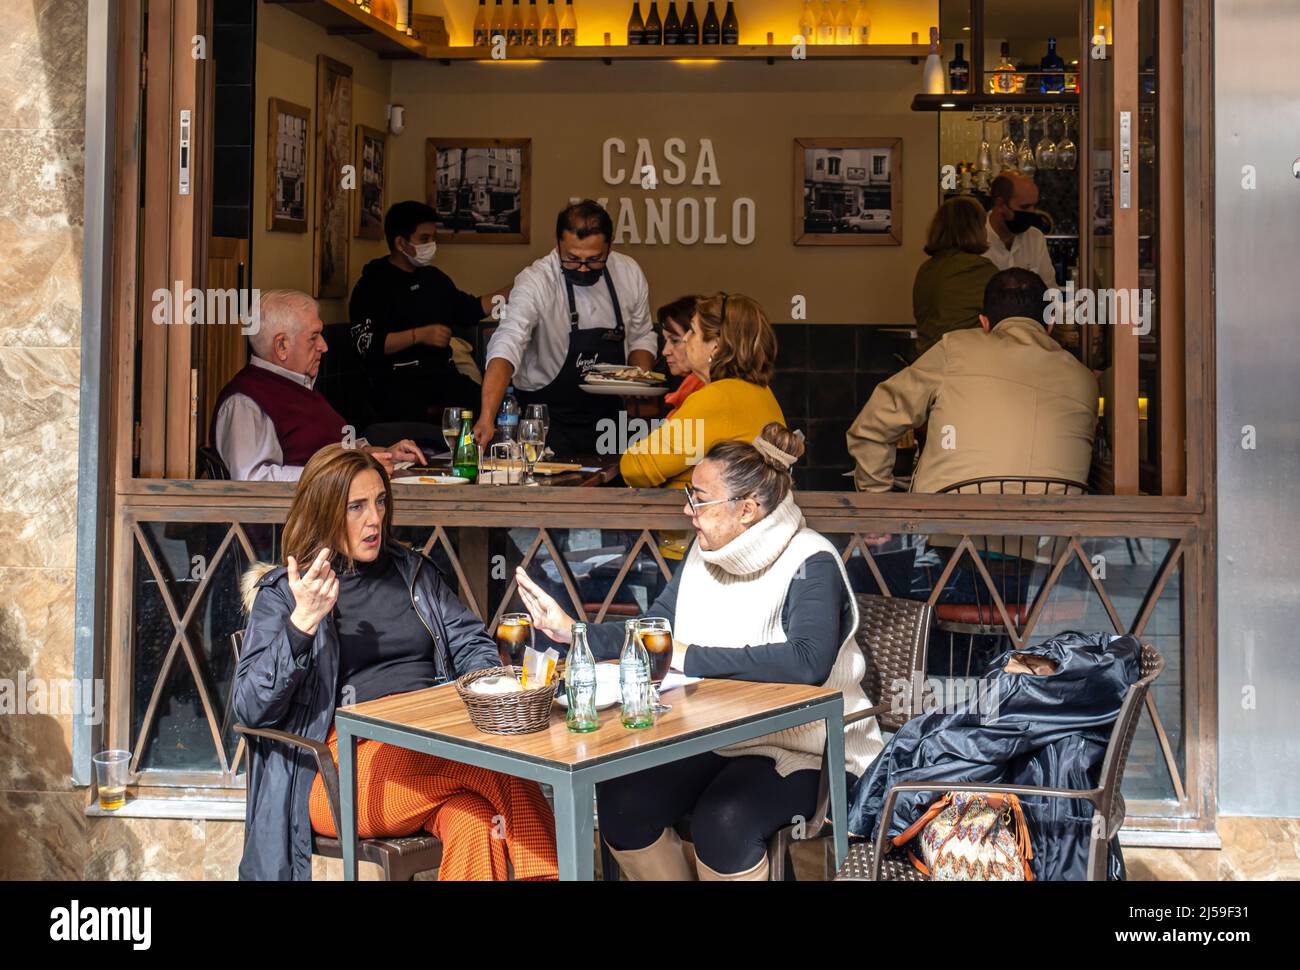 Casa Manolo tapas restaurant in old town, Alfalfa, Centro, Seville, Spain, Europe Stock Photo